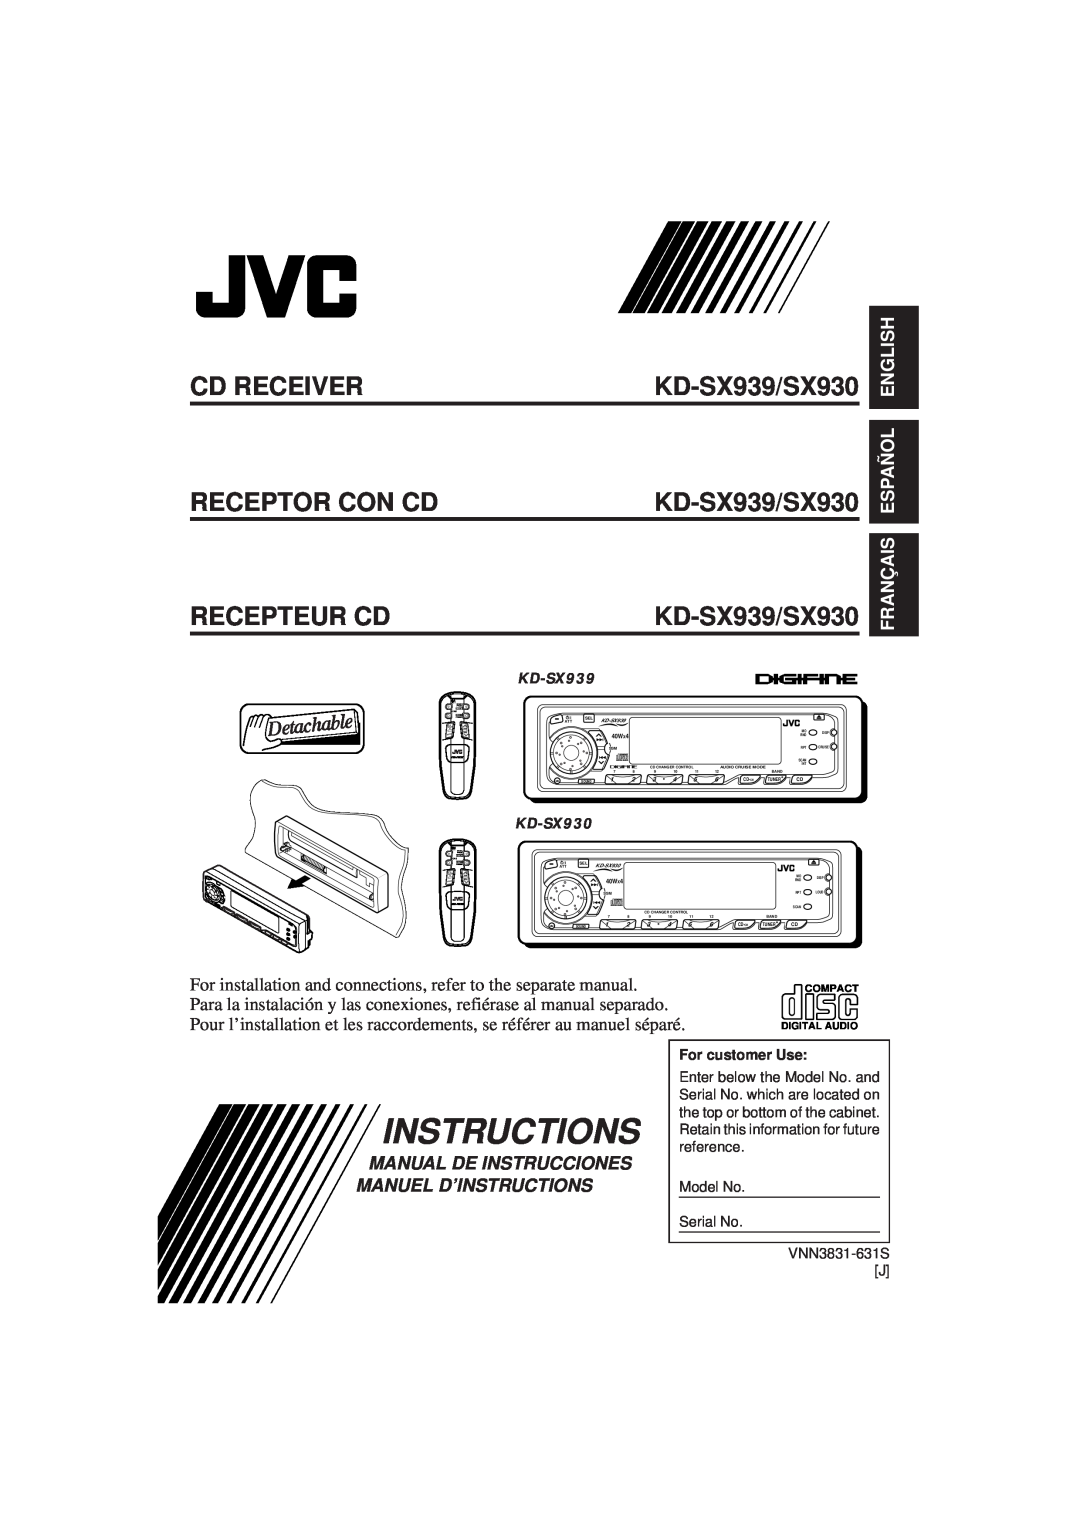 JVC KD-SX939/SX930 manual Instructions, Cd Receiver, Receptor Con Cd, Recepteur Cd, Français Español English, KD-SX930 